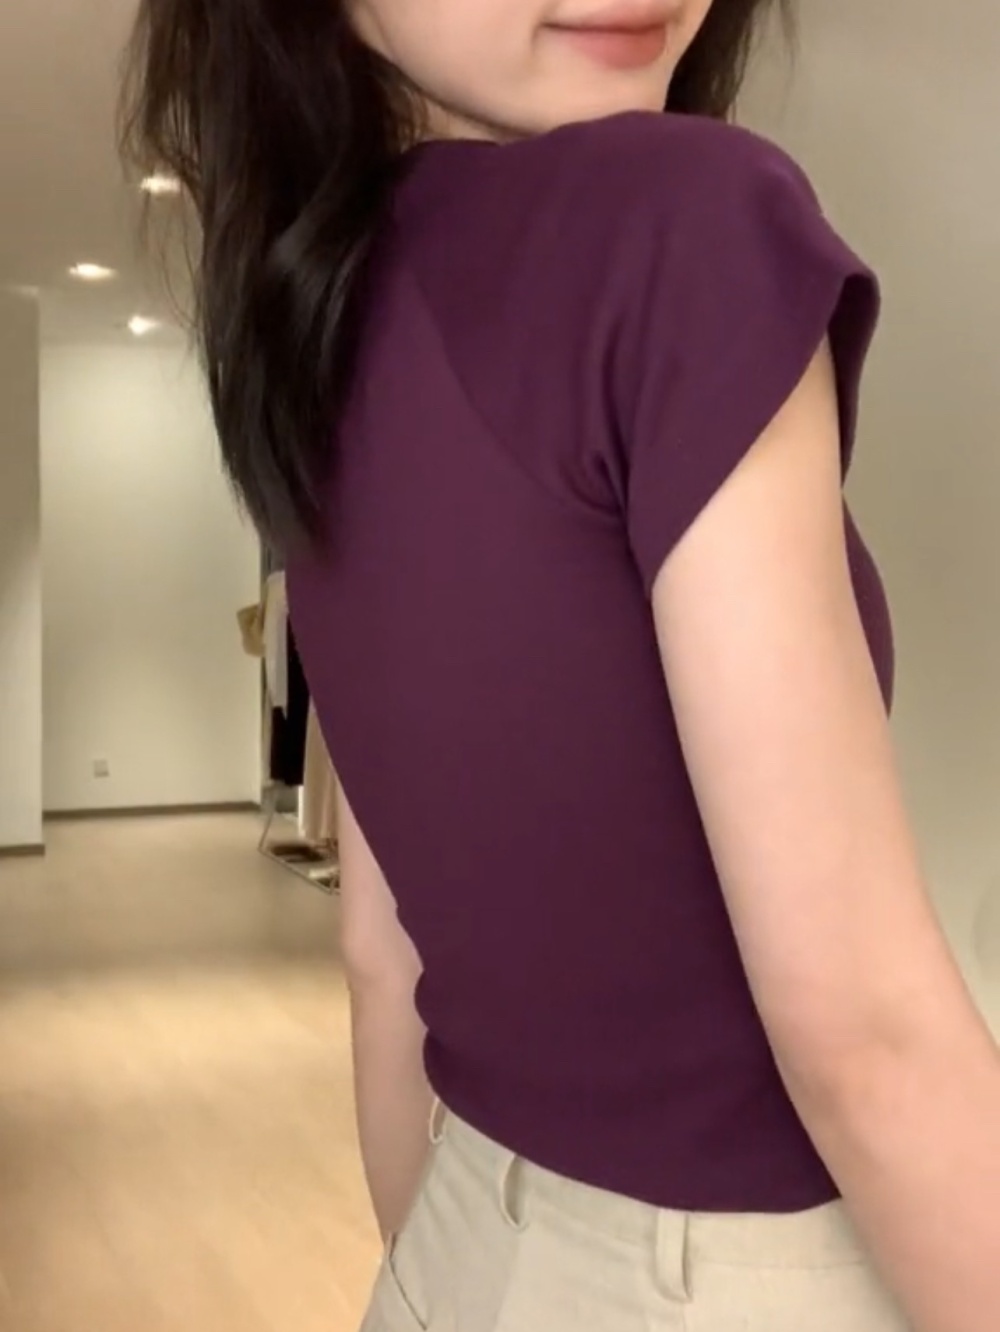 Slim spicegirl pullover tops simple pure T-shirt for women